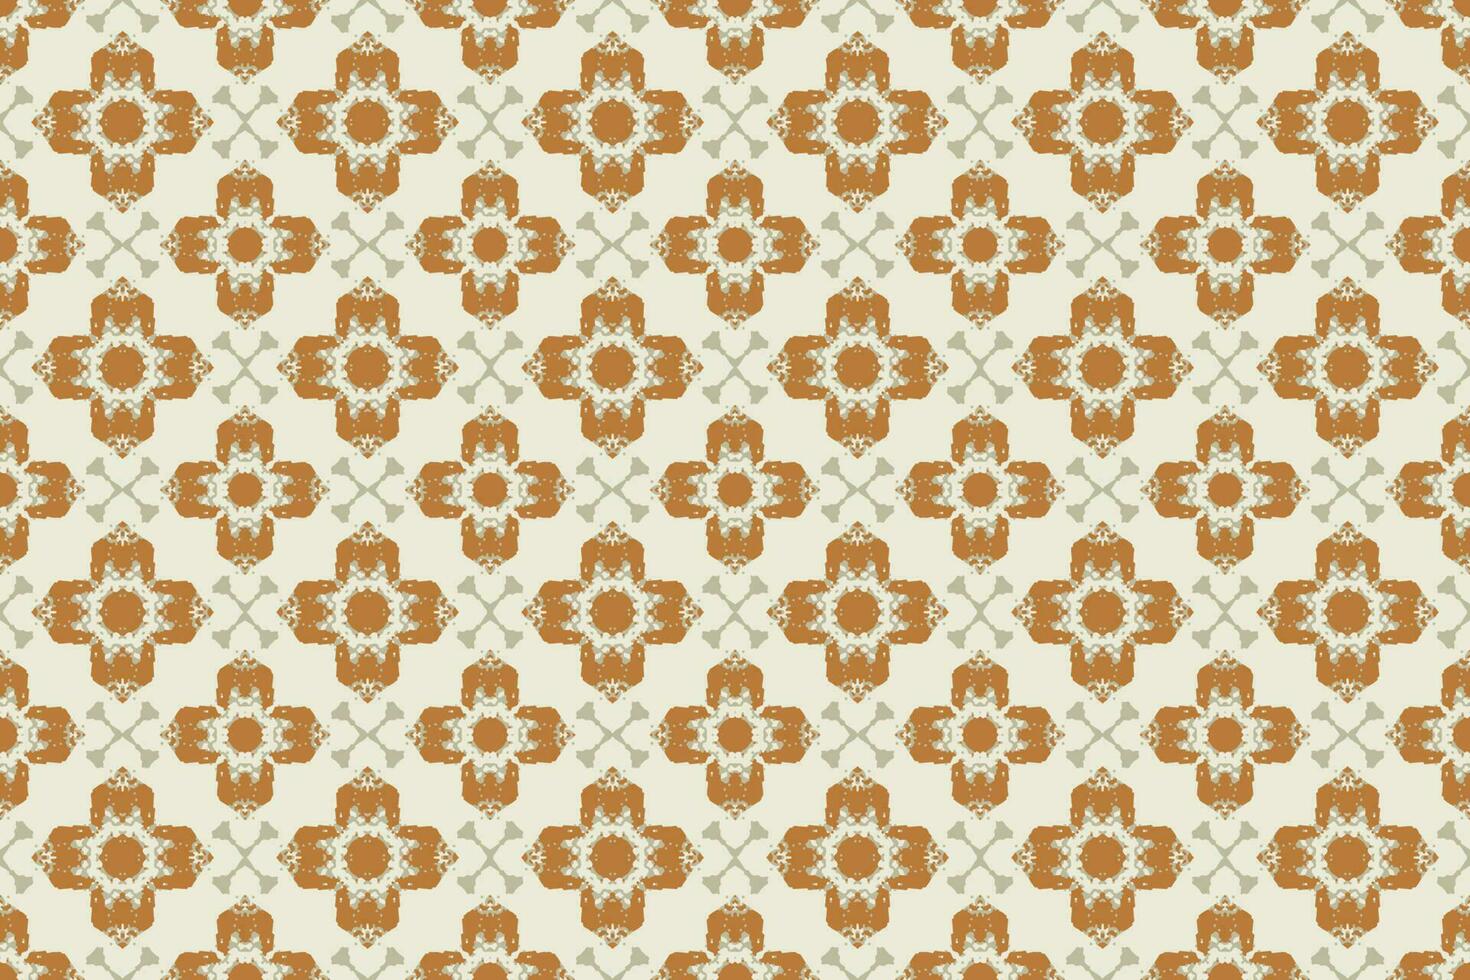 Seamless batik pattern,geometric tribal pattern,it resembles ethnic boho,aztec style,ikat style.luxury decorative fabric pattern for famous banners.designed for use fabric,curtain,carpet,Batik vector